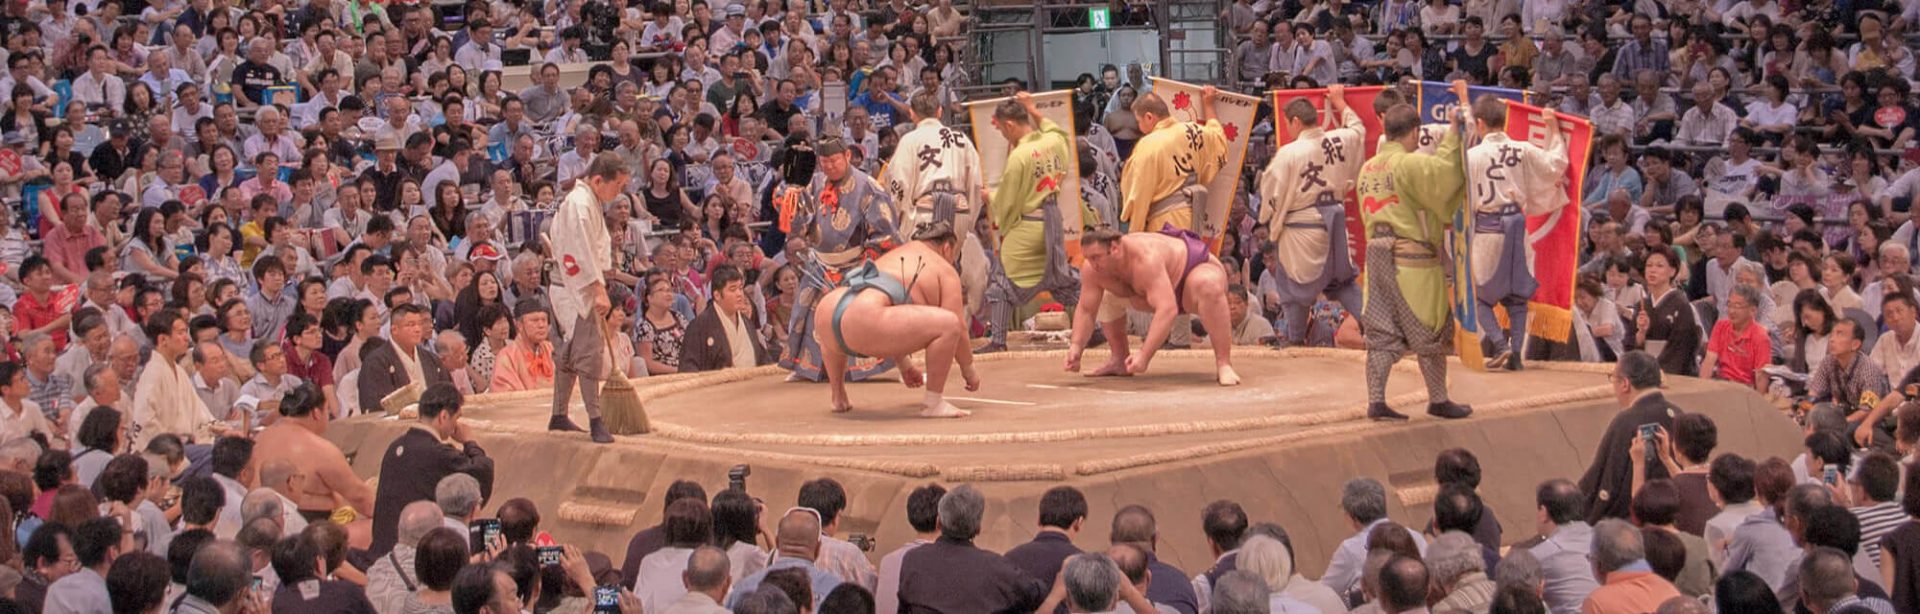 Grand Sumo Tournament At Nagoya Kawaii Aichi Travel To Aichi